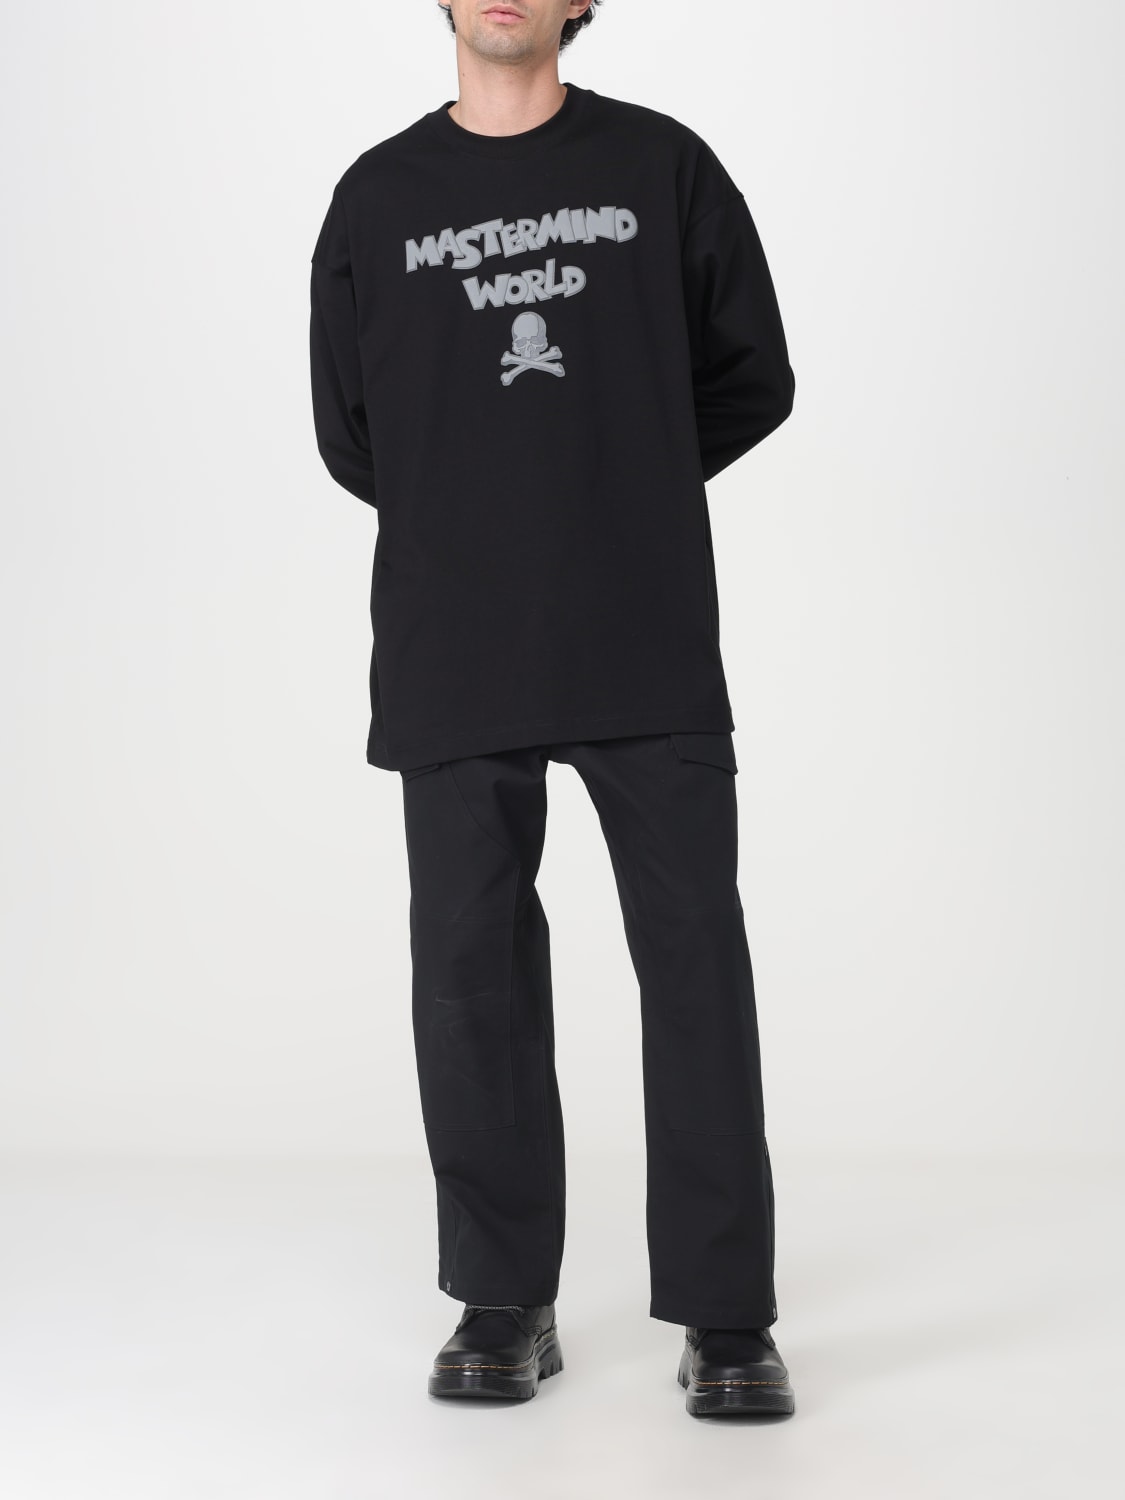 MASTERMIND WORLD: t-shirt for man - Black | Mastermind World t